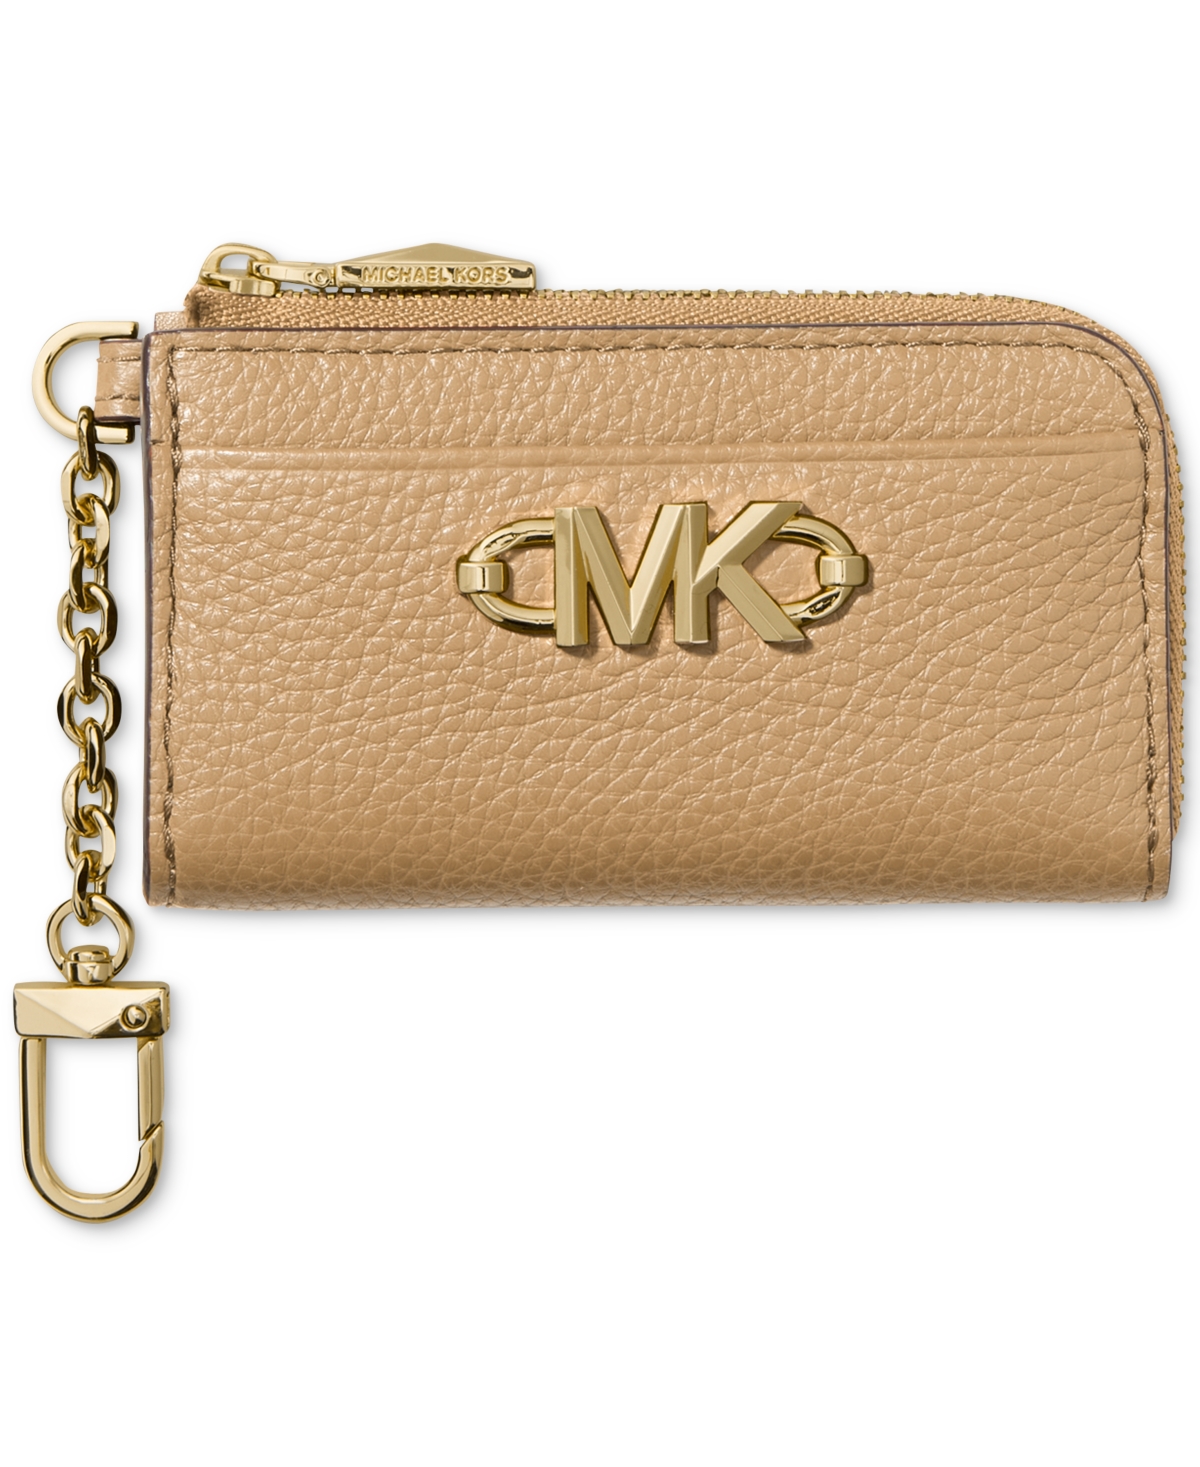 Michael Kors Piper Card Case & Reviews - Handbags & Accessories - Macy's